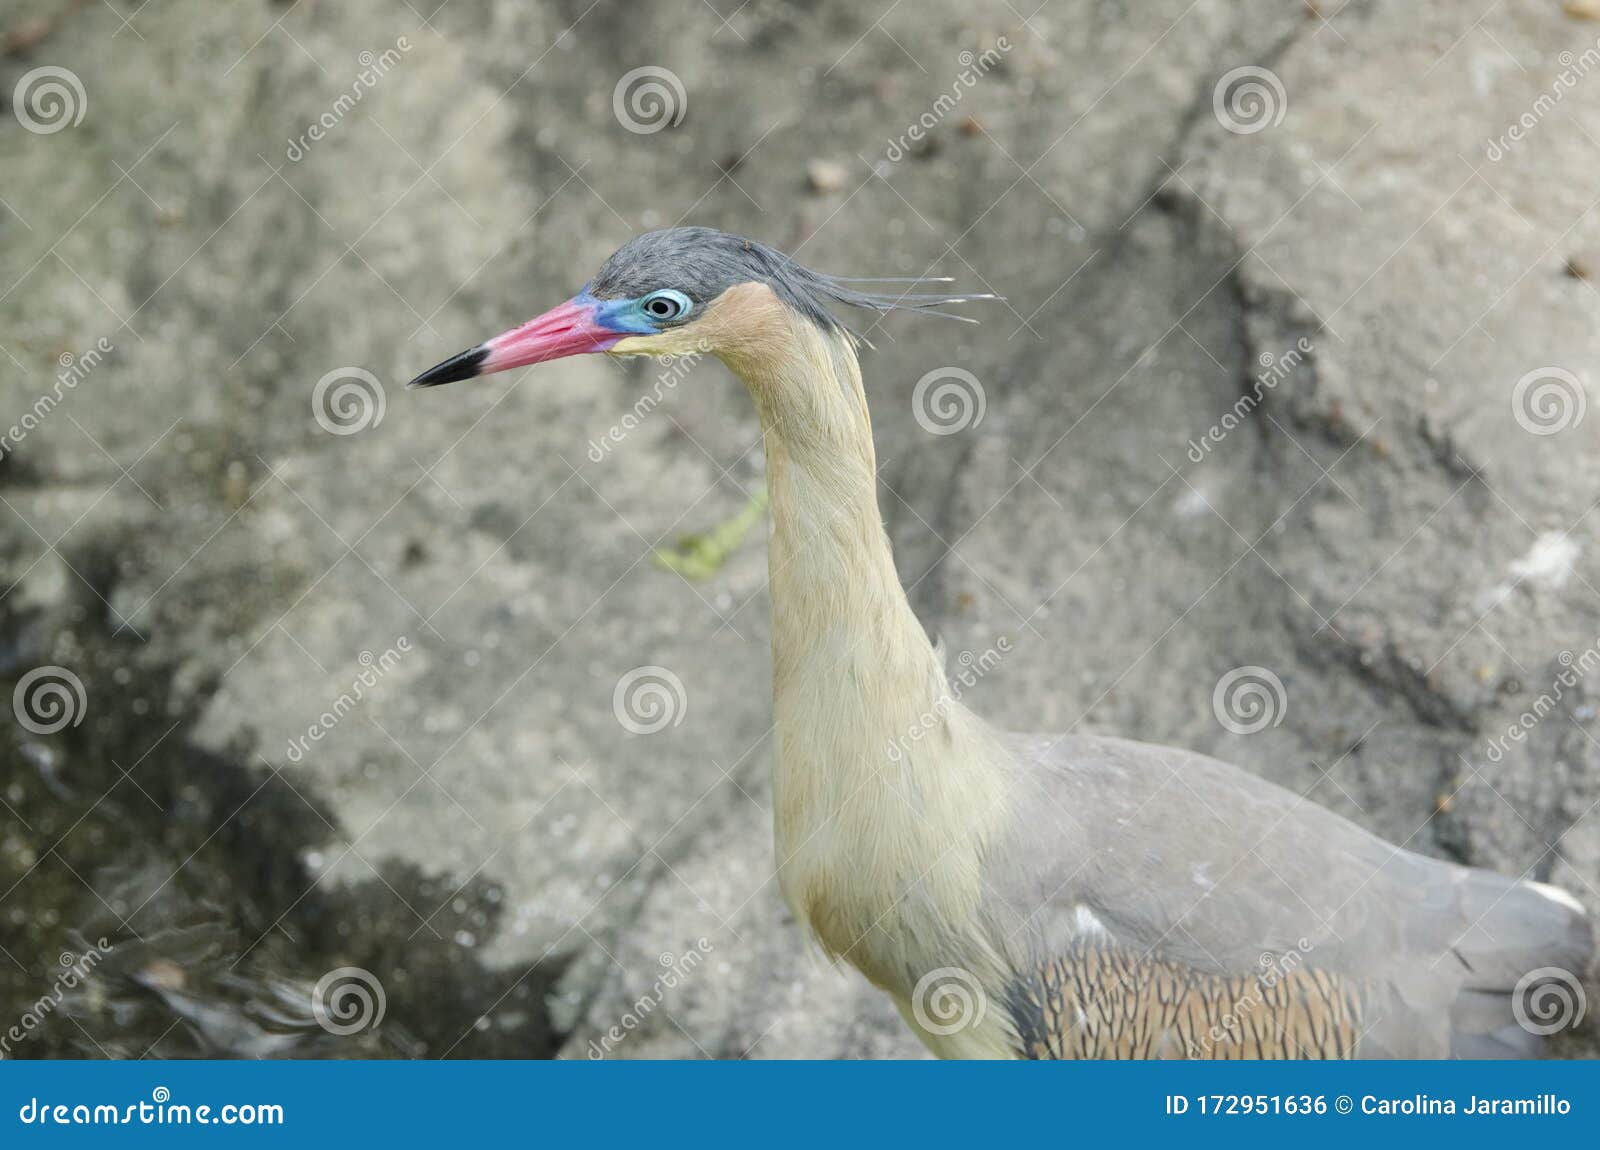 portrait of a whistling heron, syrigma sibilatrix; specimen in captivity